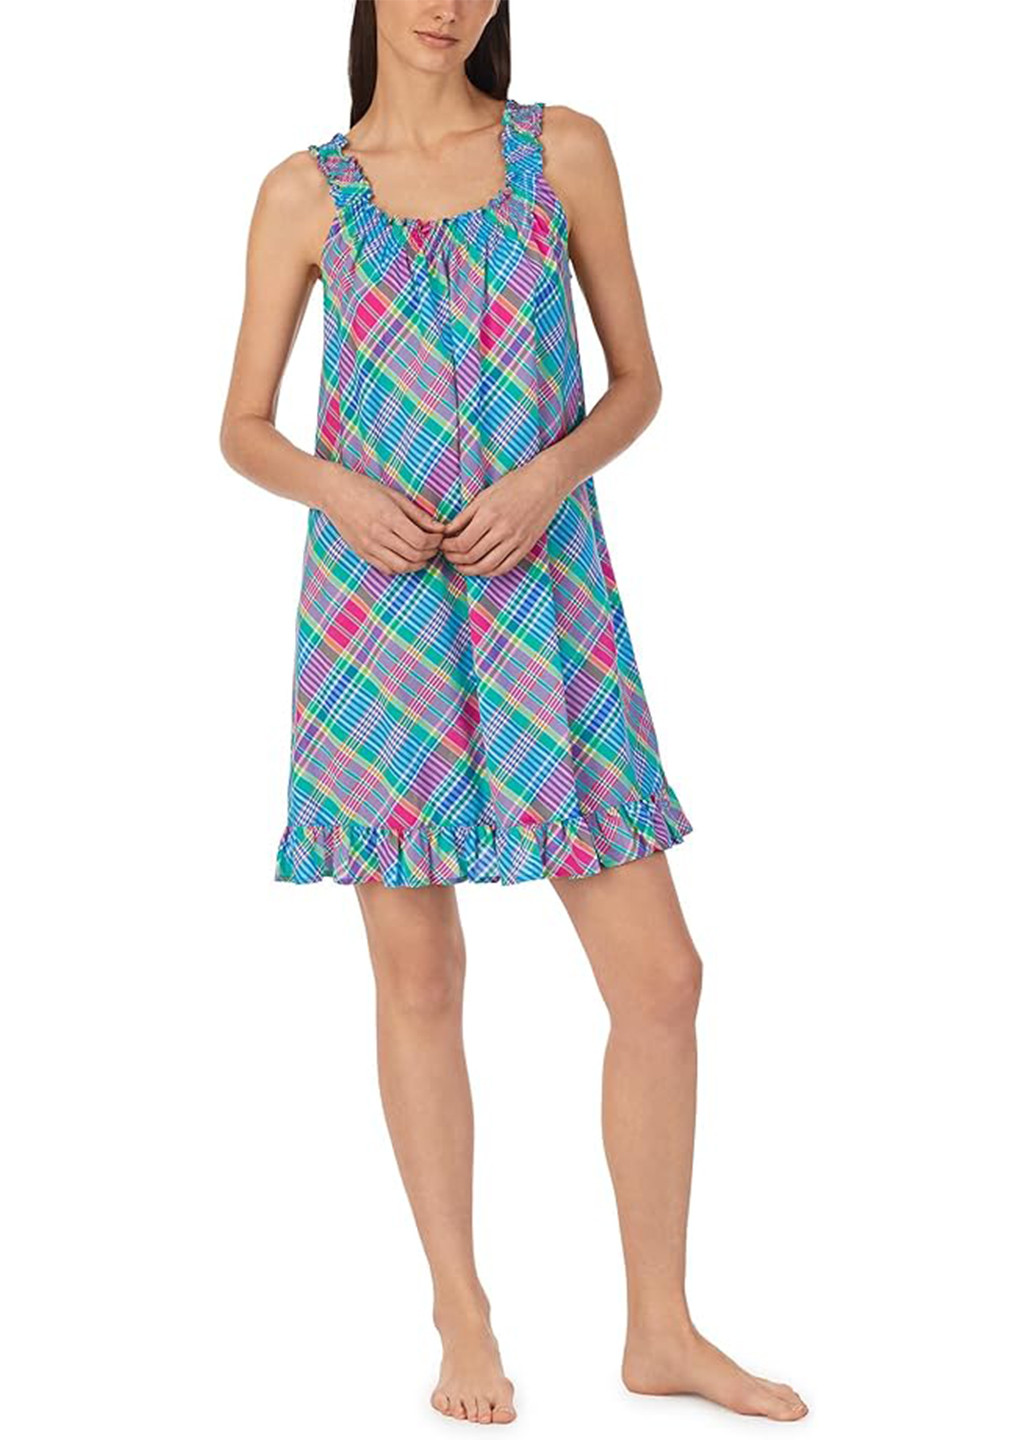 Синее домашнее платье а-силуэт Ralph Lauren с геометрическим узором